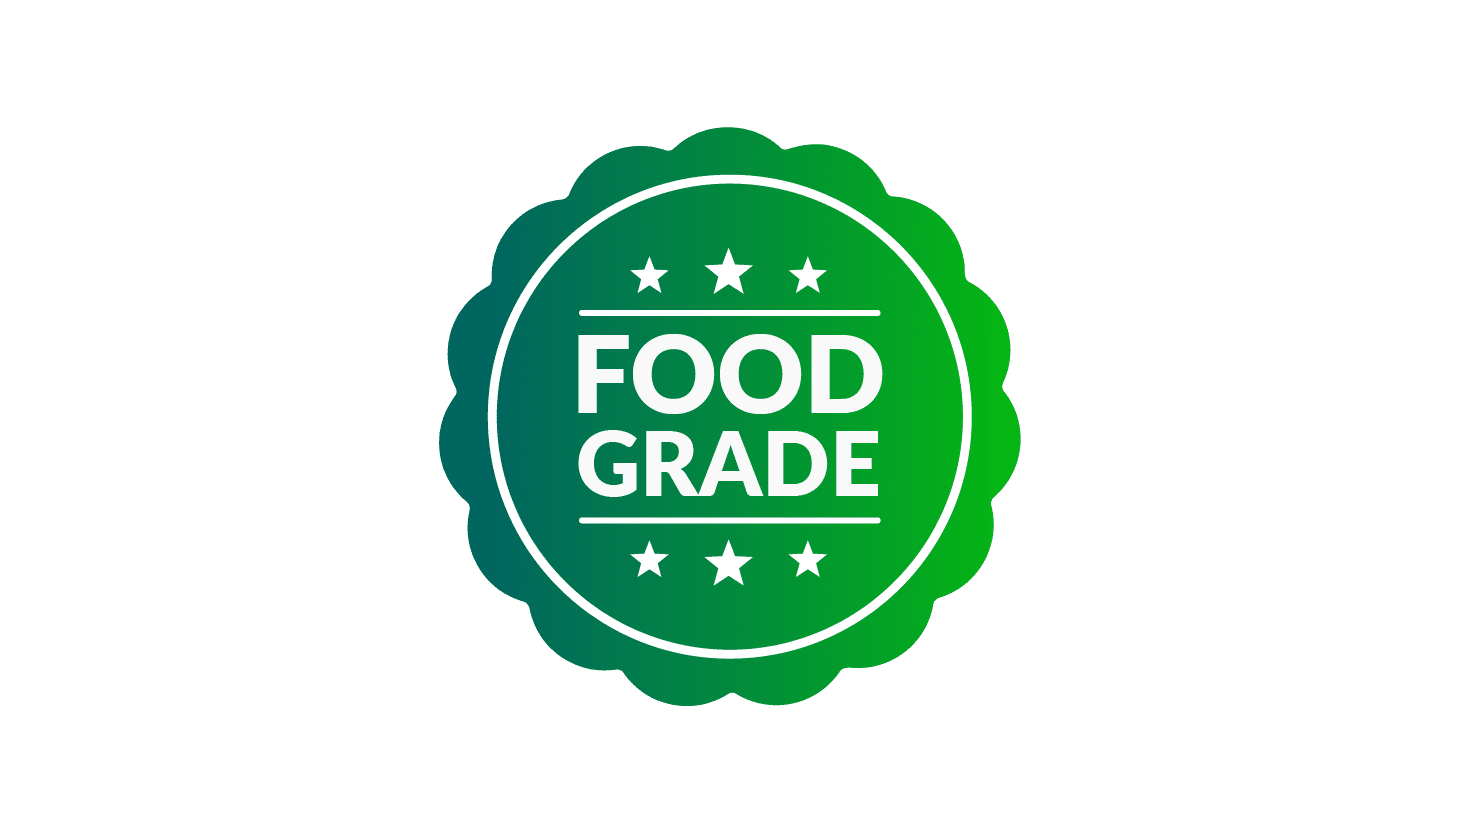 Food Grade